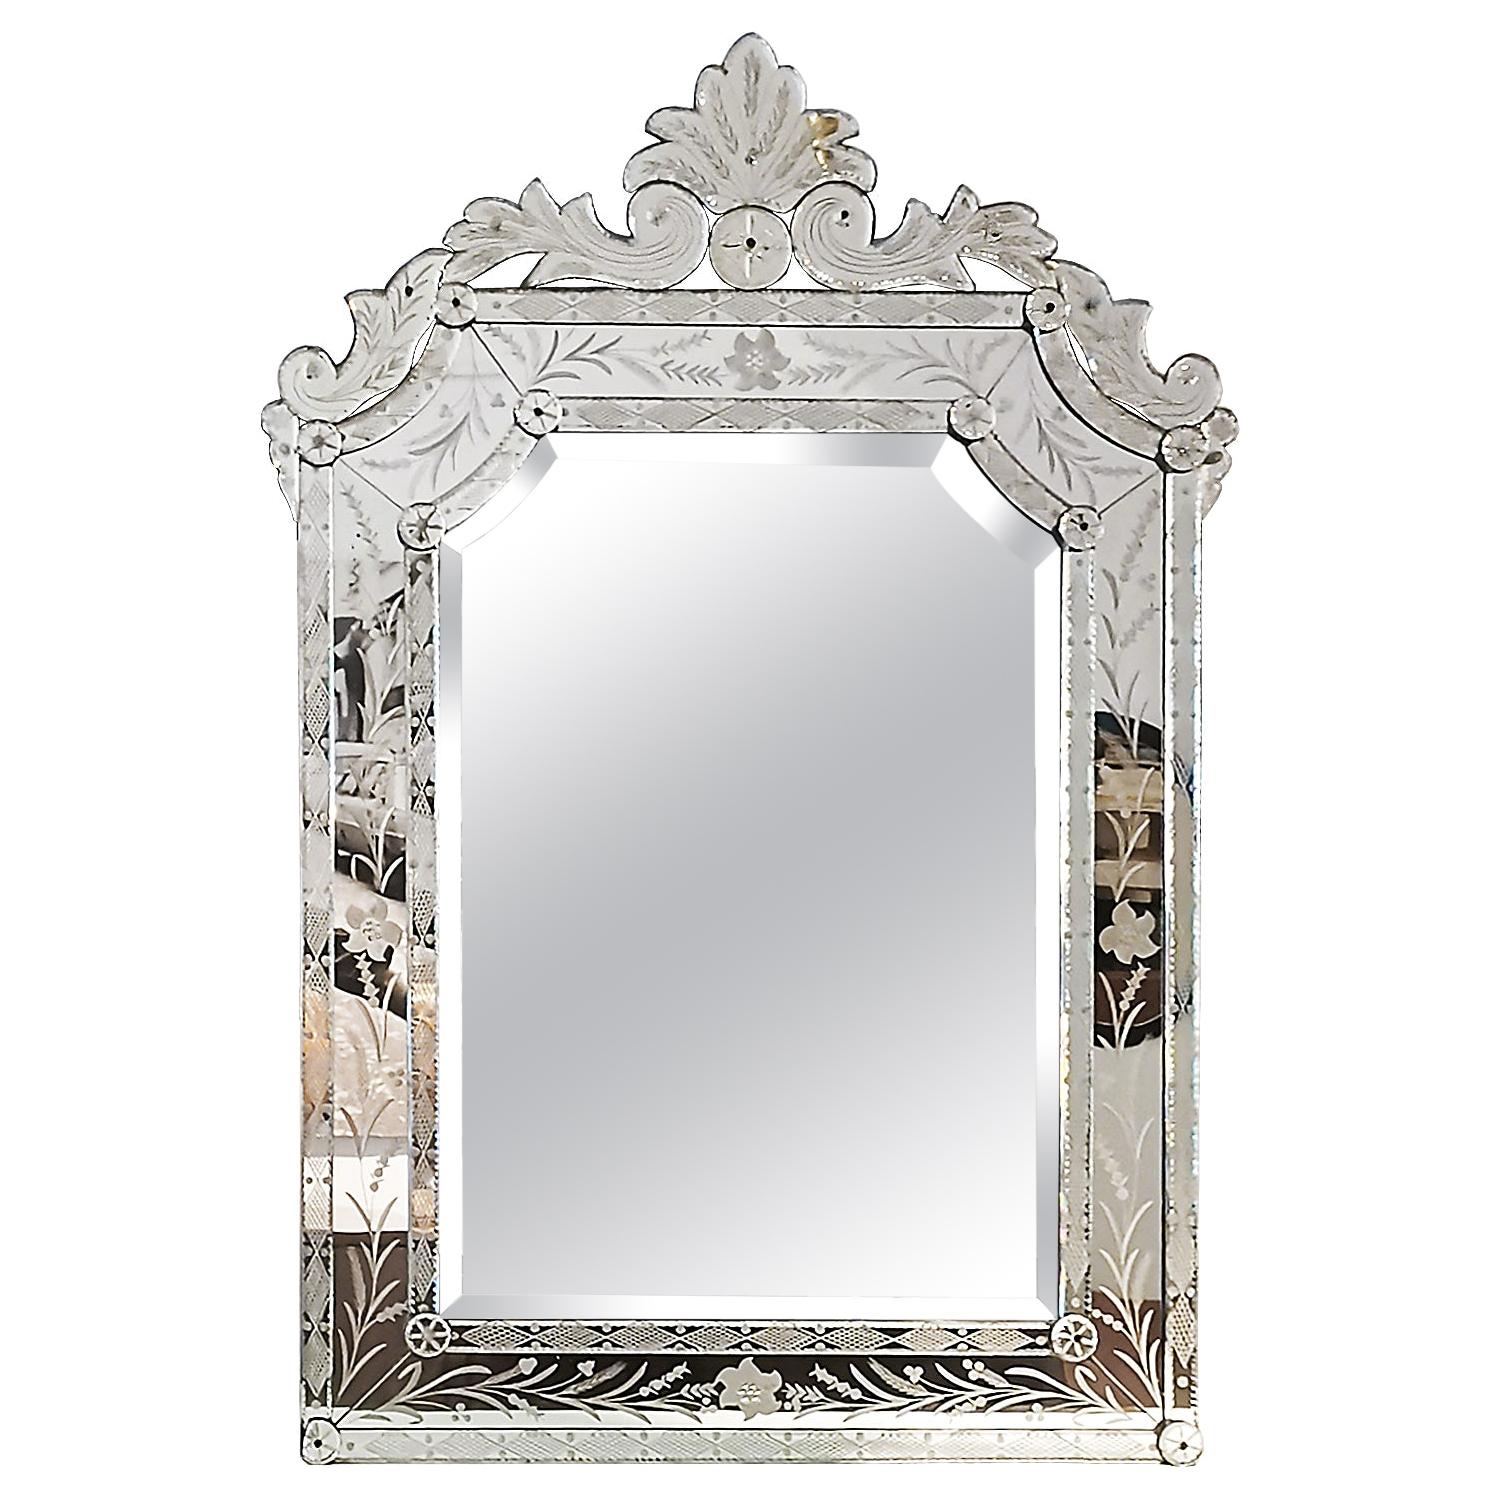 1940s Neoclassical Beveled Mirror, Acid Engraved Mirror Frame, Spain, Majorca